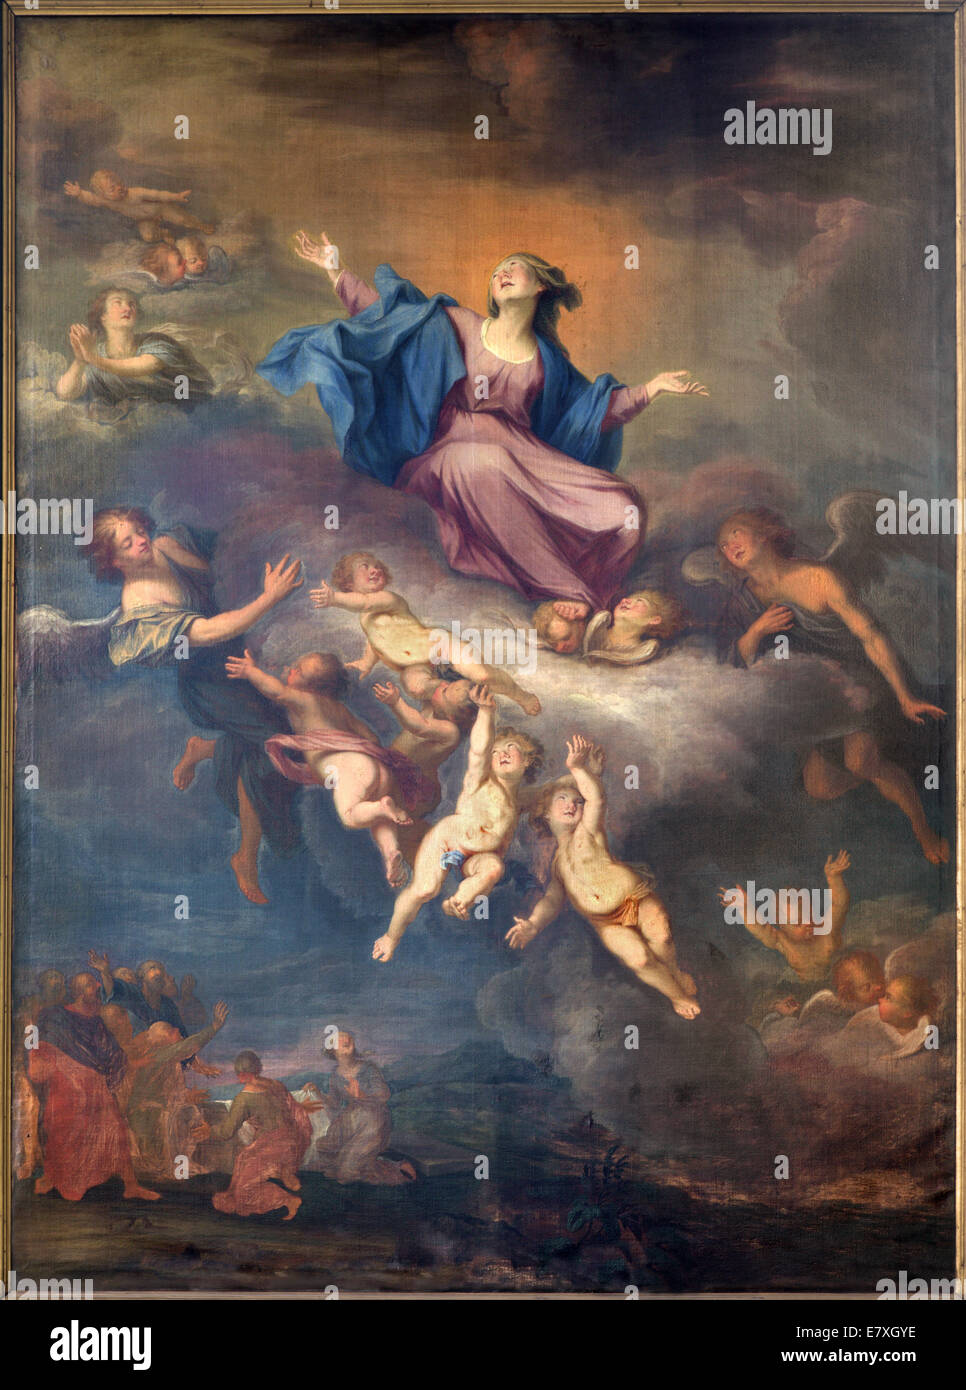 BRUGES, Belgio - 12 giugno 2014: l'Assunzione della Vergine Maria da M. Vanduvene da 17. cento. in st. Jacobs chiesa (Jakobskerk). Foto Stock